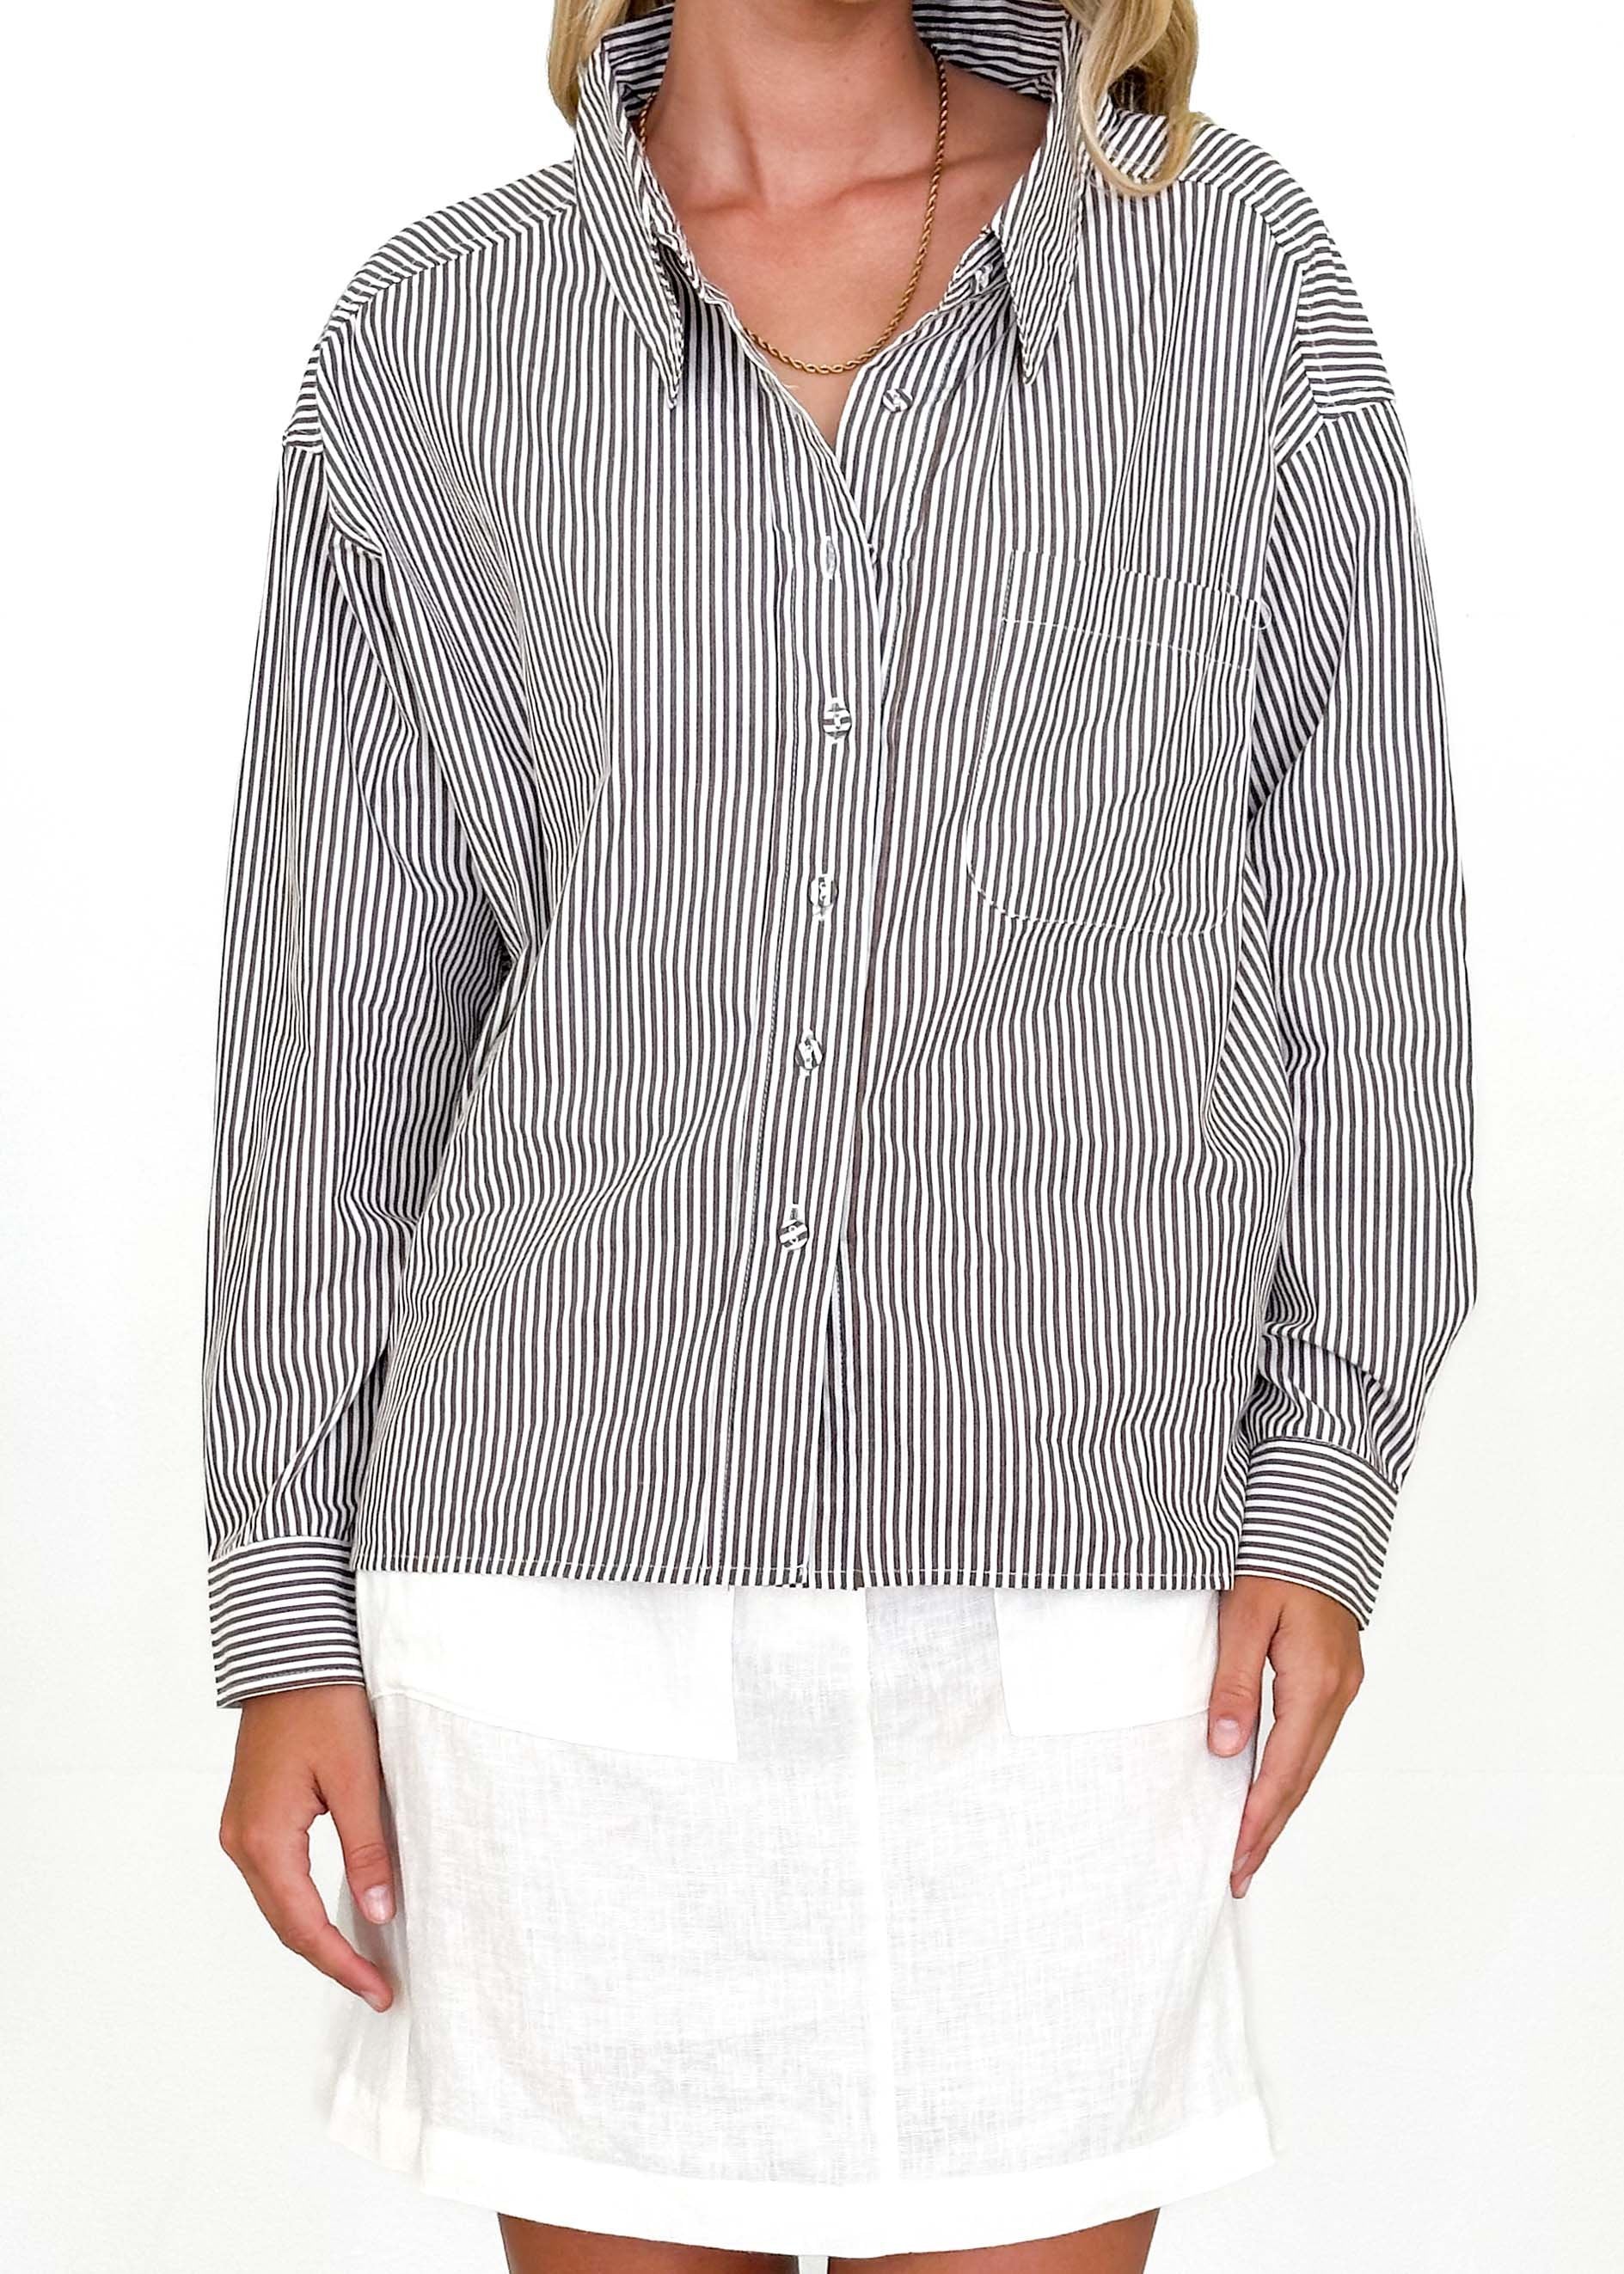 Clario Shirt - Choc Stripe